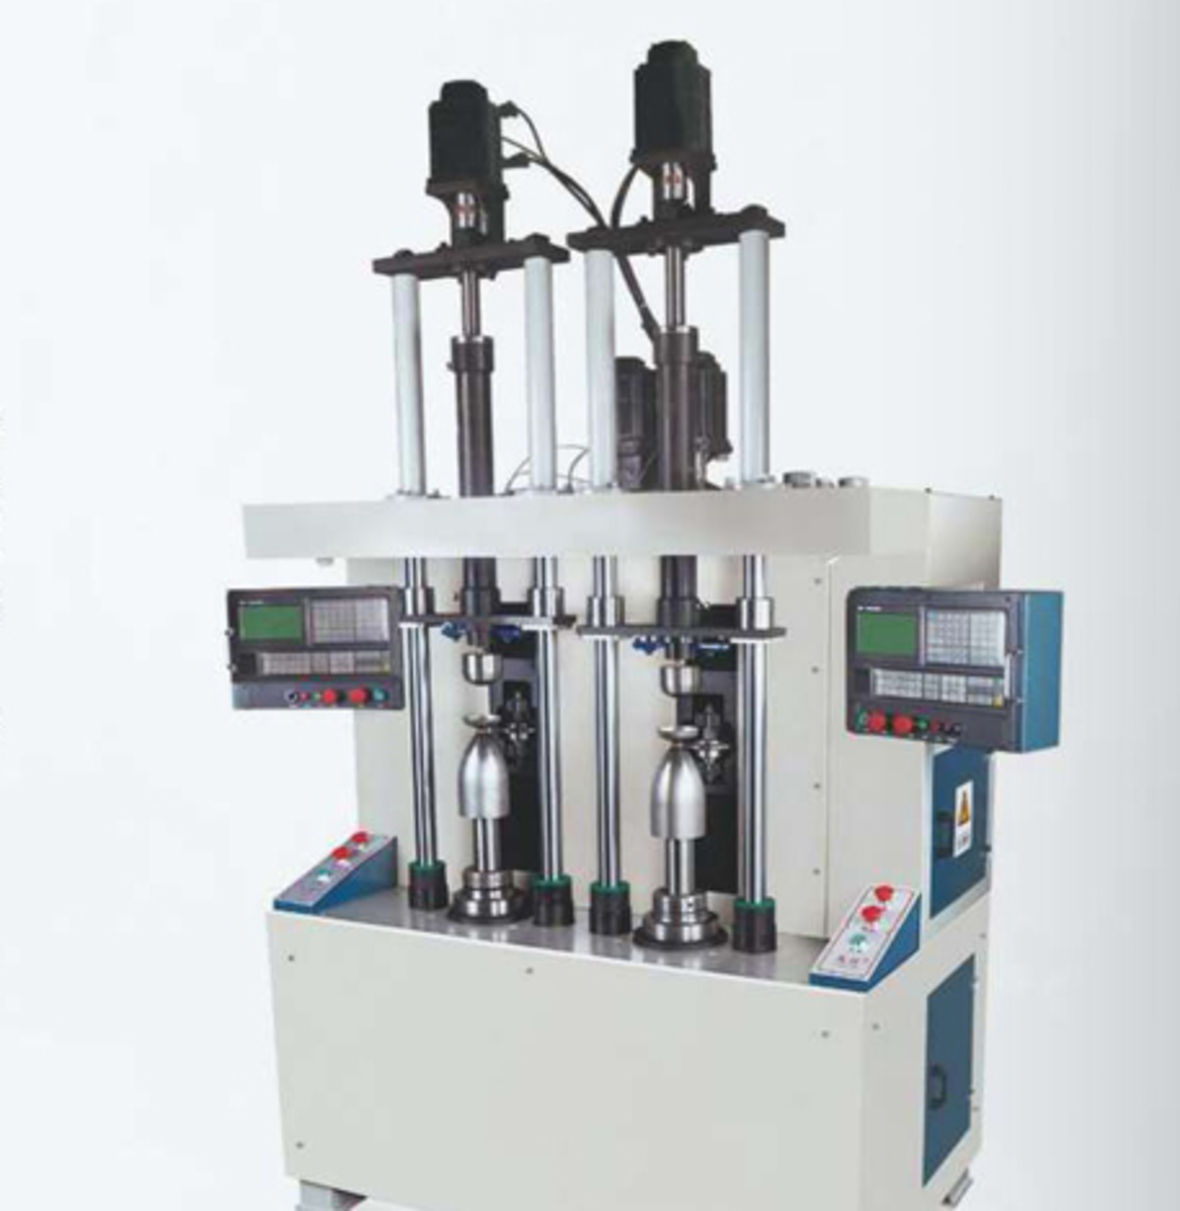 The application of Zhishan G3 series servo on CNC shrinking machine